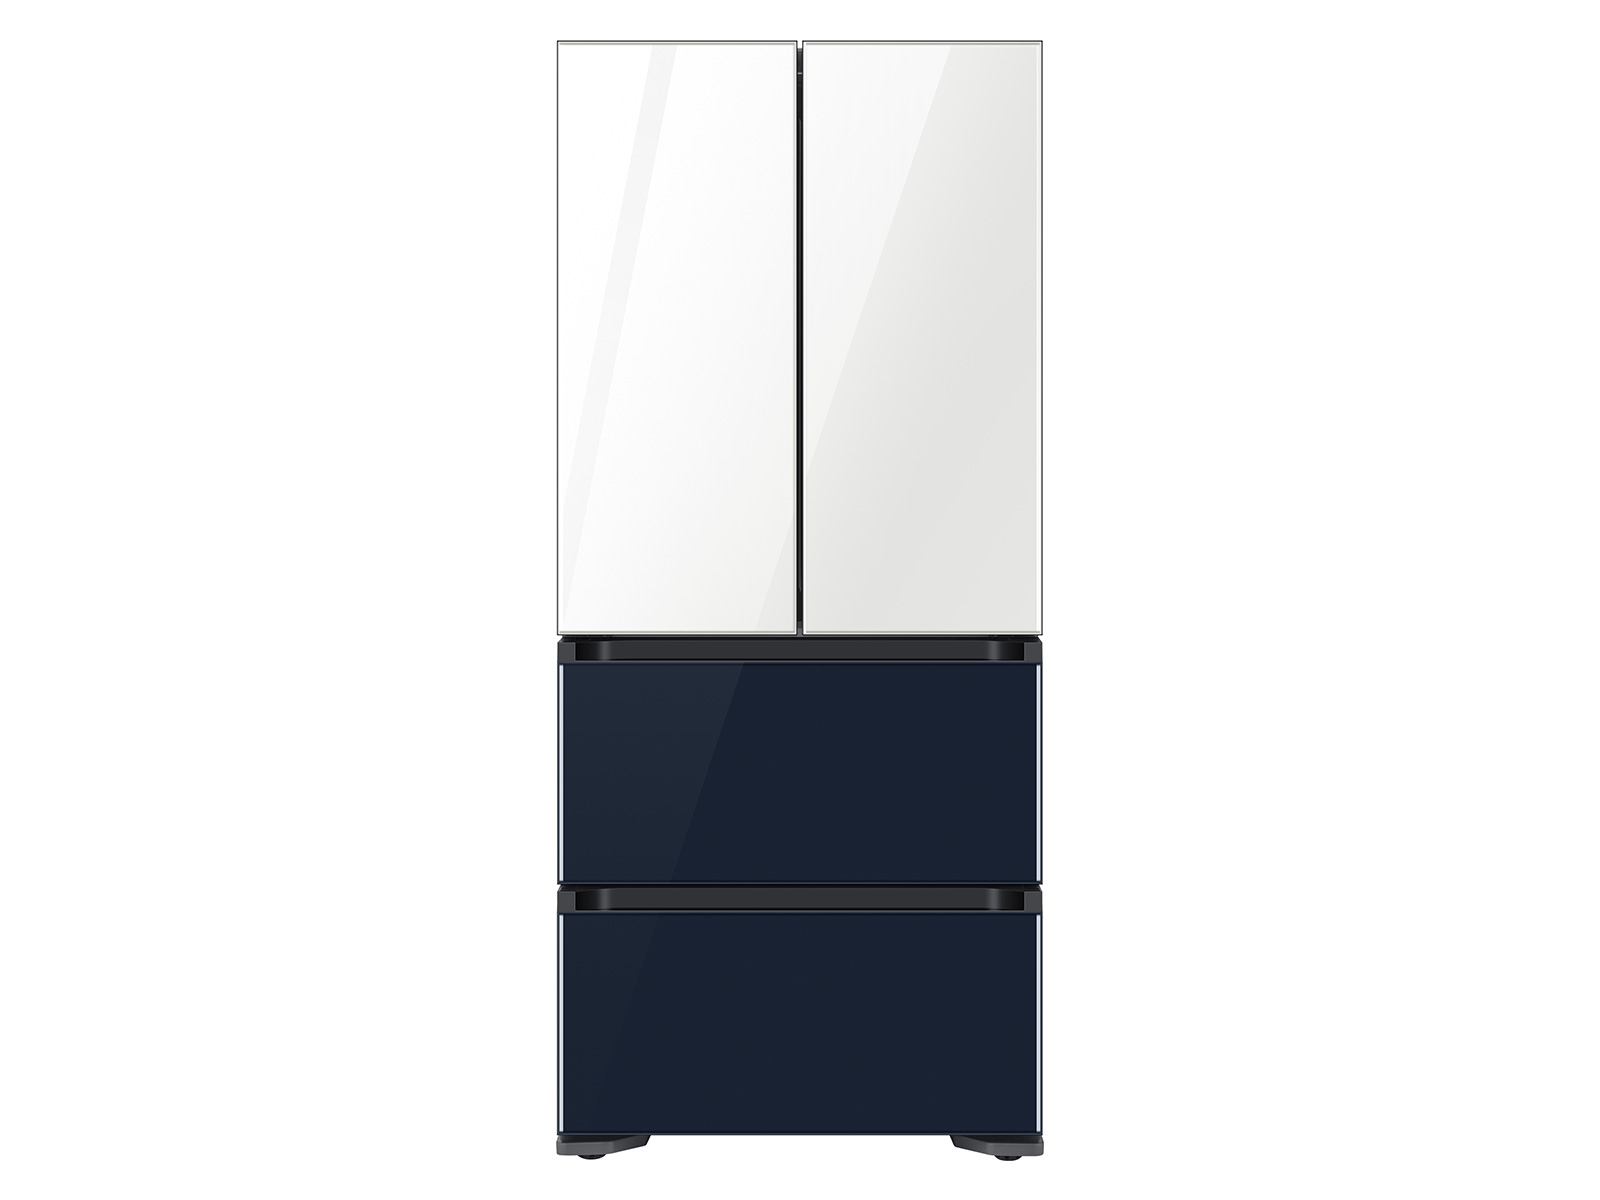 Samsung 17.3 cu. ft. Smart Kimchi & Specialty 4-Door French Door Refrigerator in White-Navy Blue Glass(RQ48T94B277/AA)